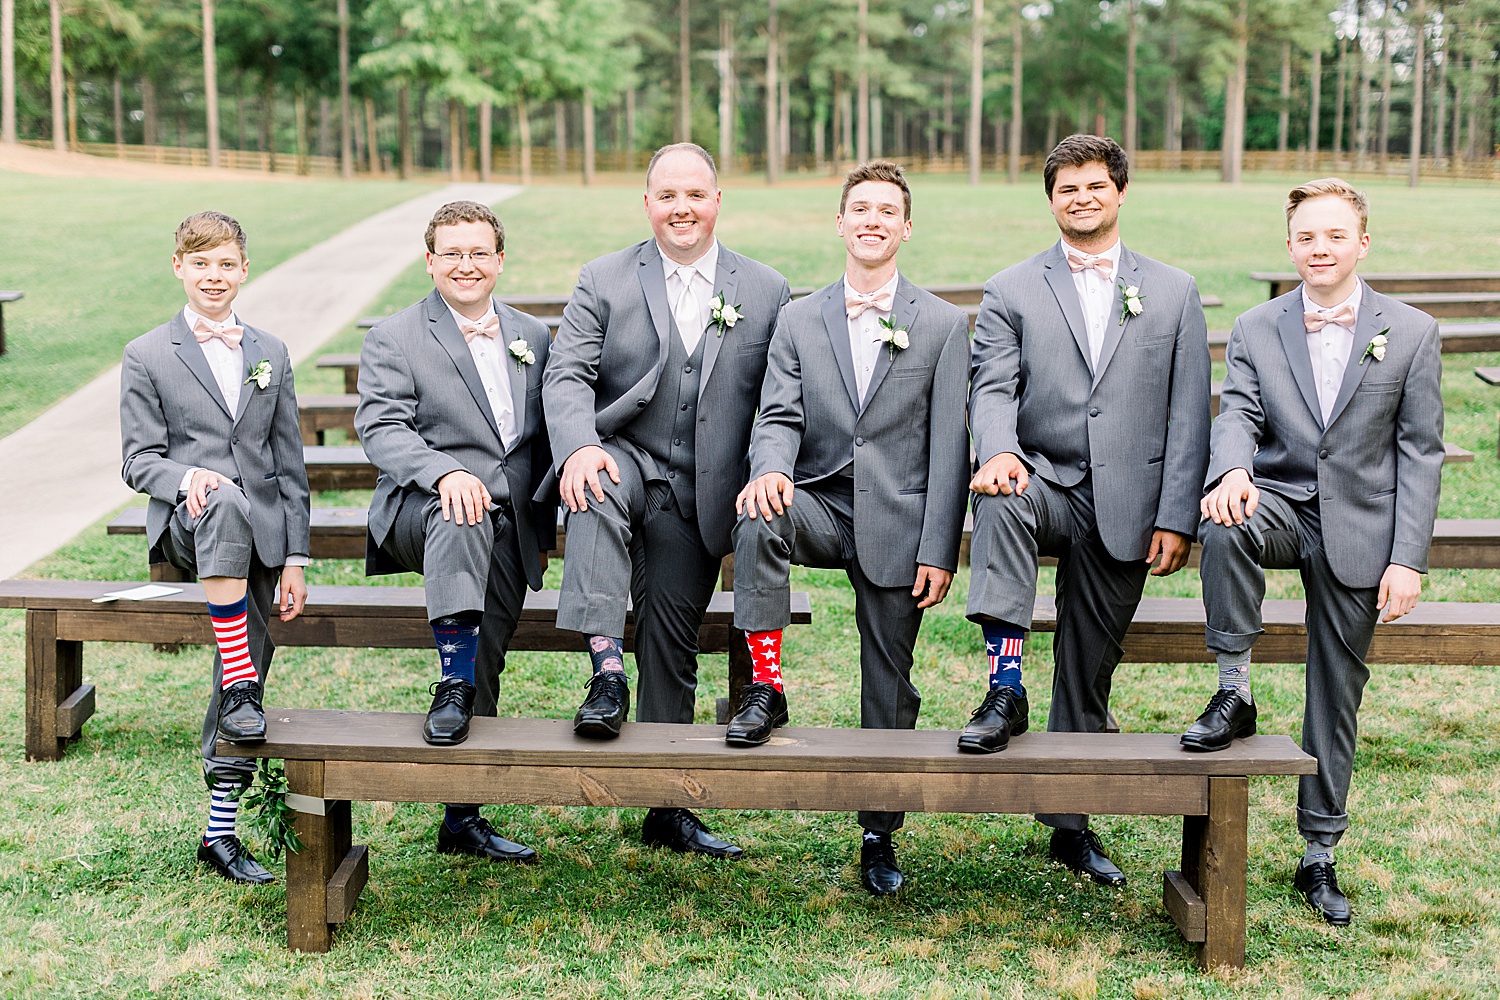 groom and groomsmen show off funny socks on wedding day